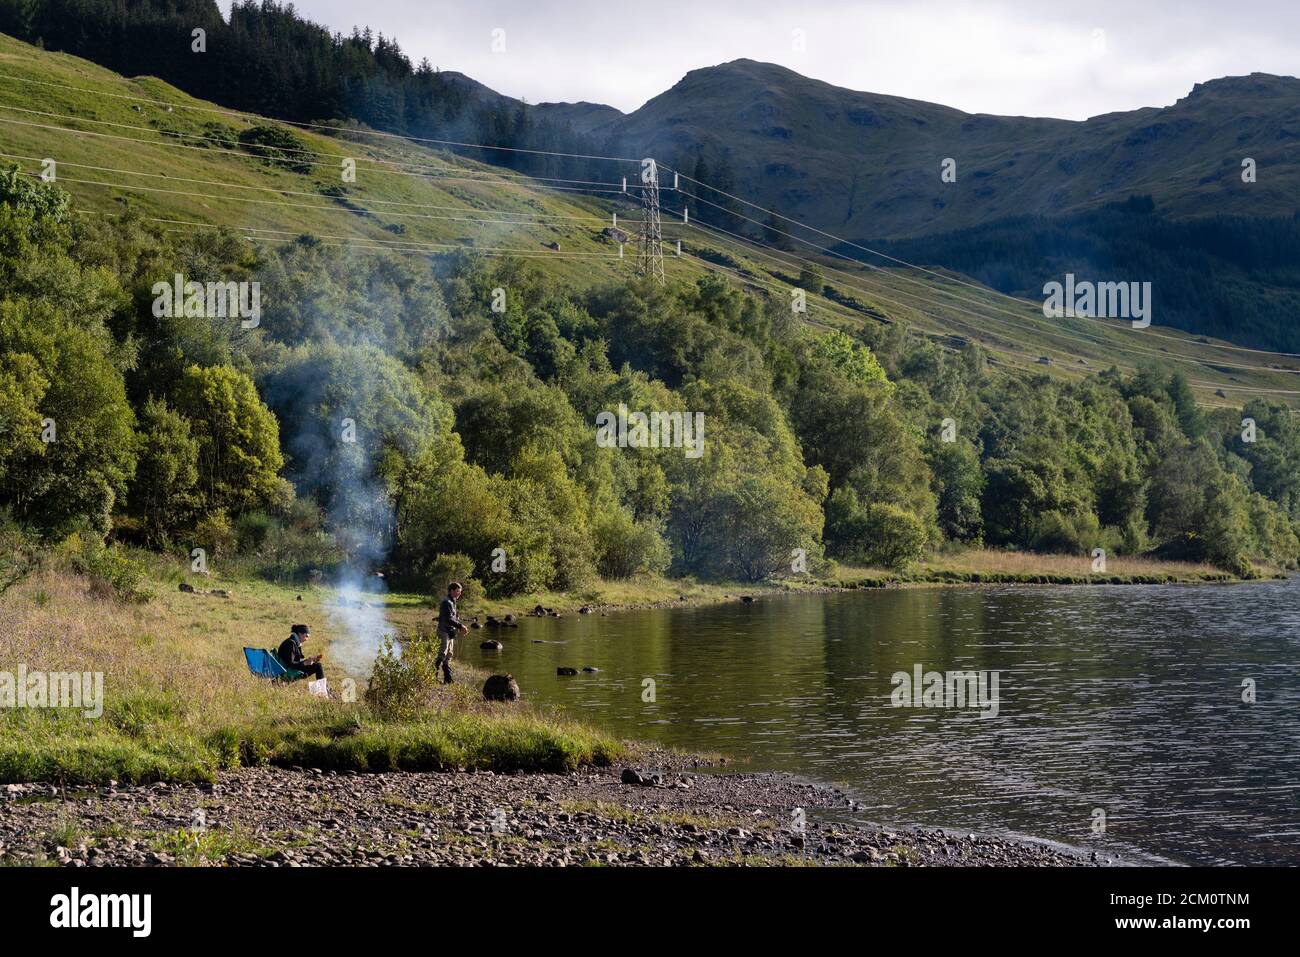 Loch Lubhair, Trossachs, Scotland - off A85 road near Crianlarich. Popular wild camping spot. Stock Photo